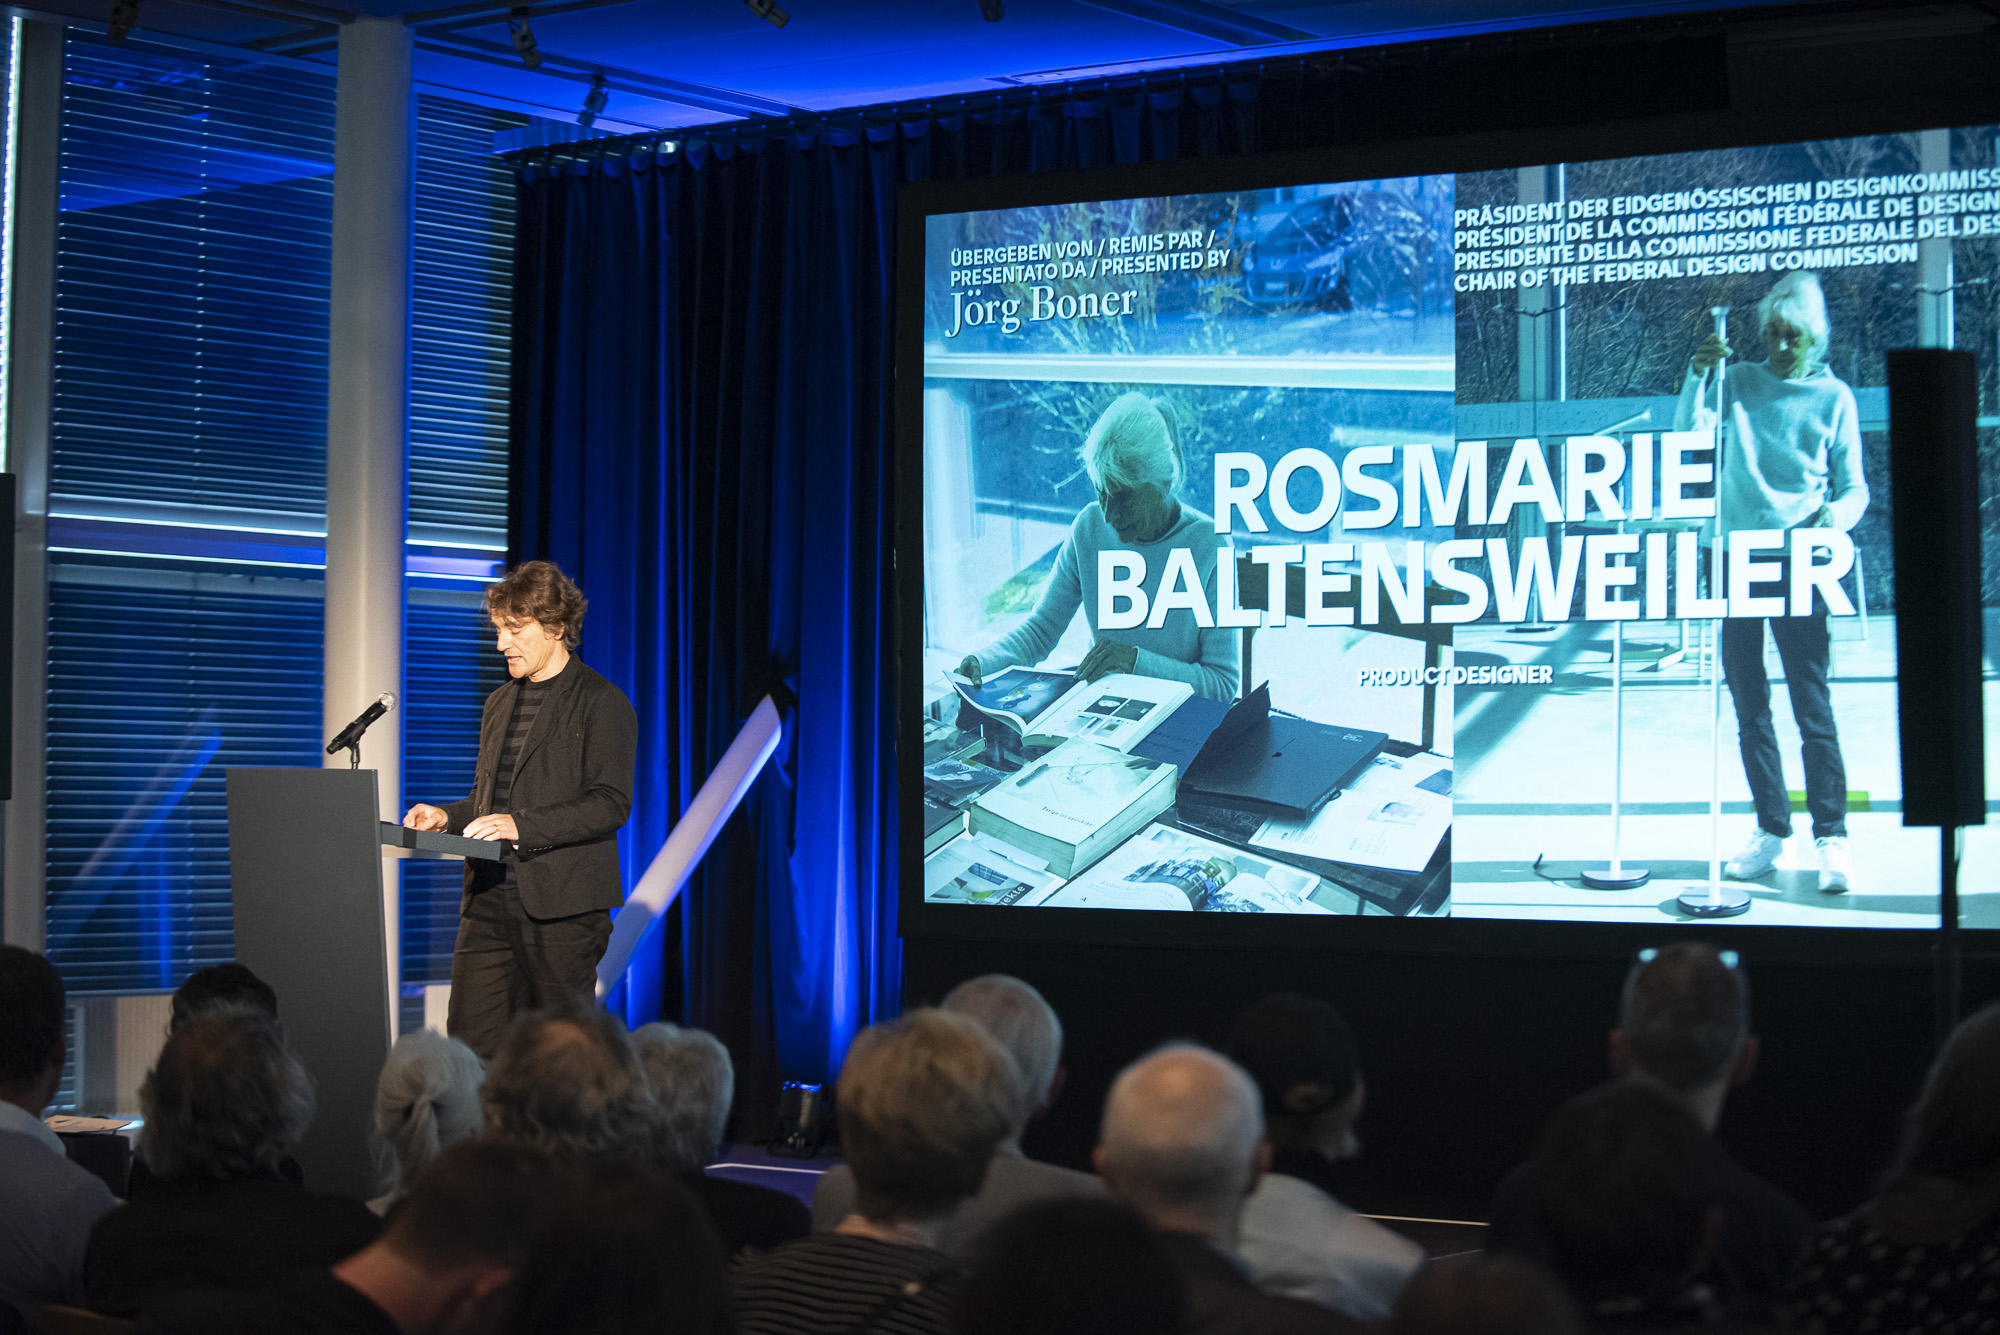 Swiss Design Awards ceremony, Jörg Boner presenting Rosmarie Baltensweiler